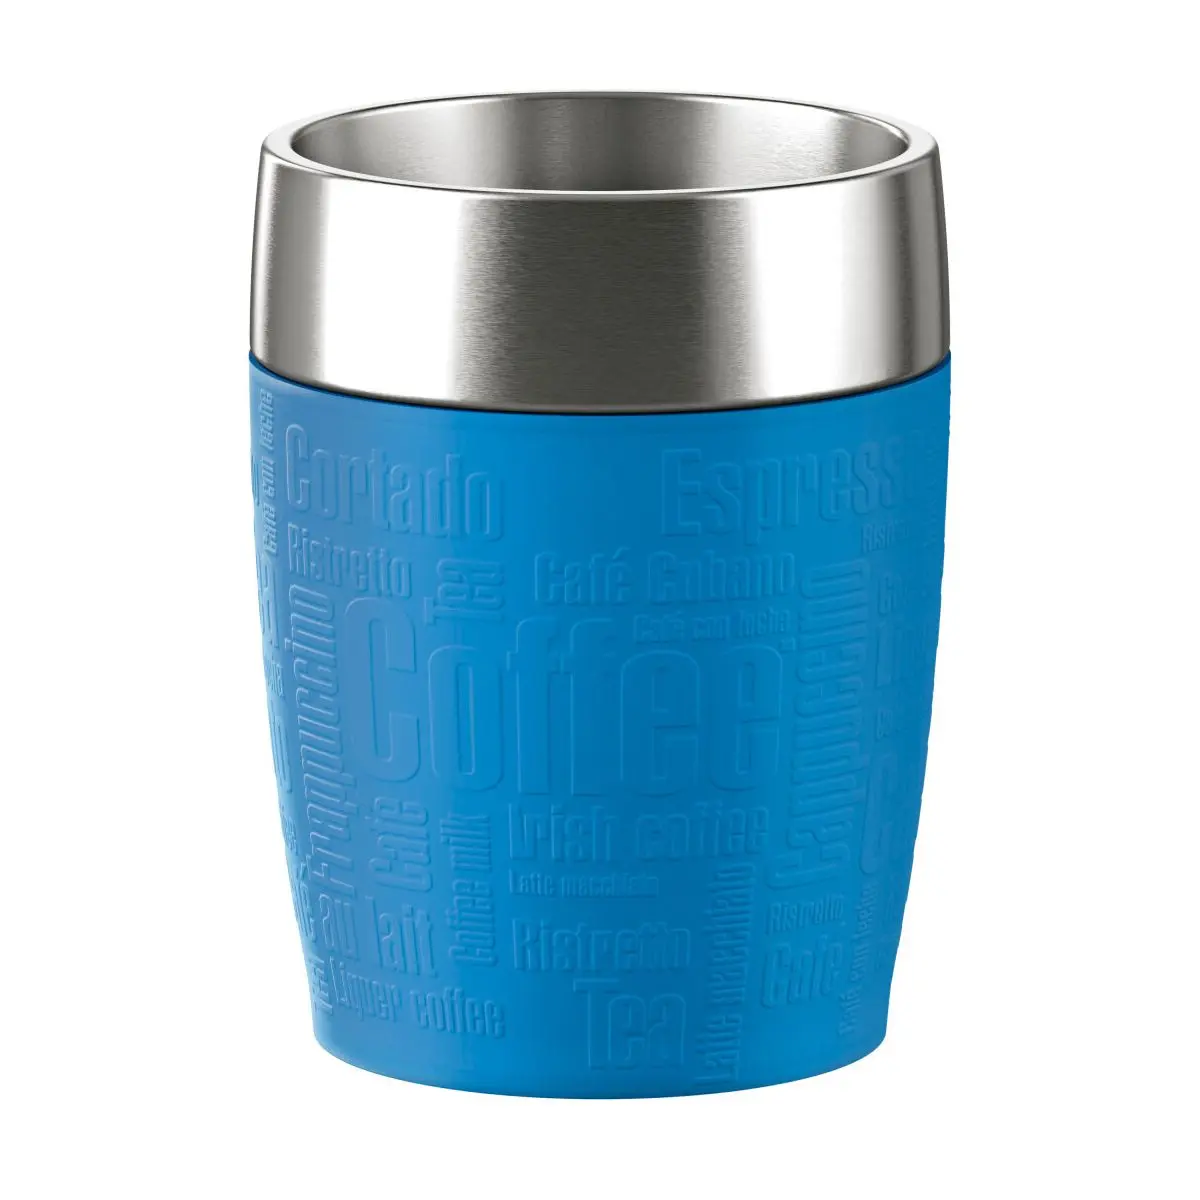 Cana termopan Travel Cup - 0,2 litri, albastra